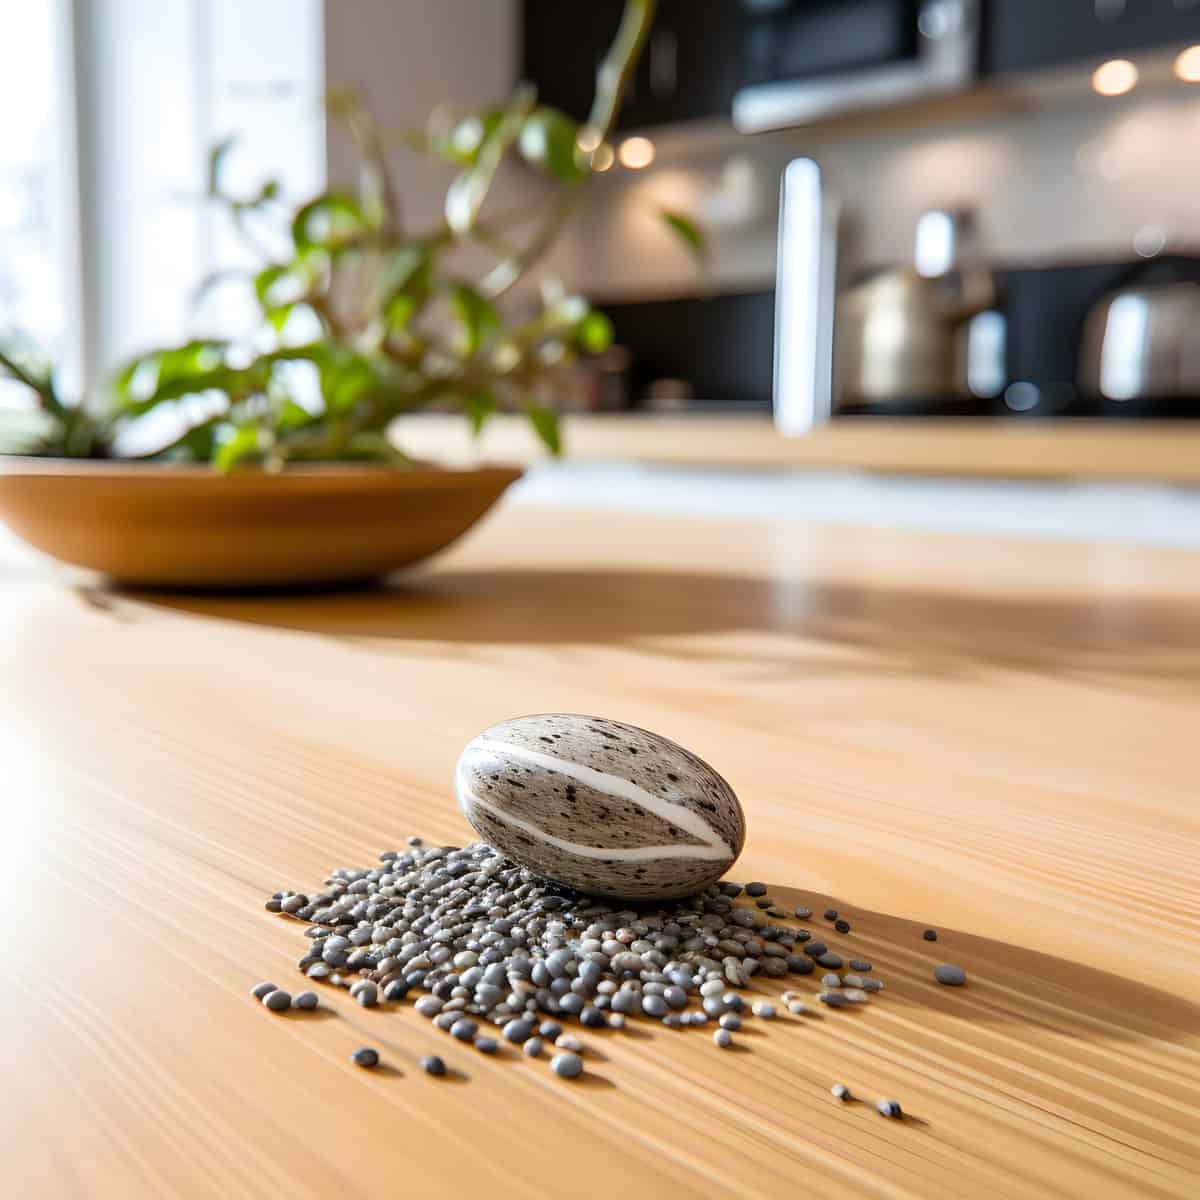 Kaiwa Seeds on a kitchen counter